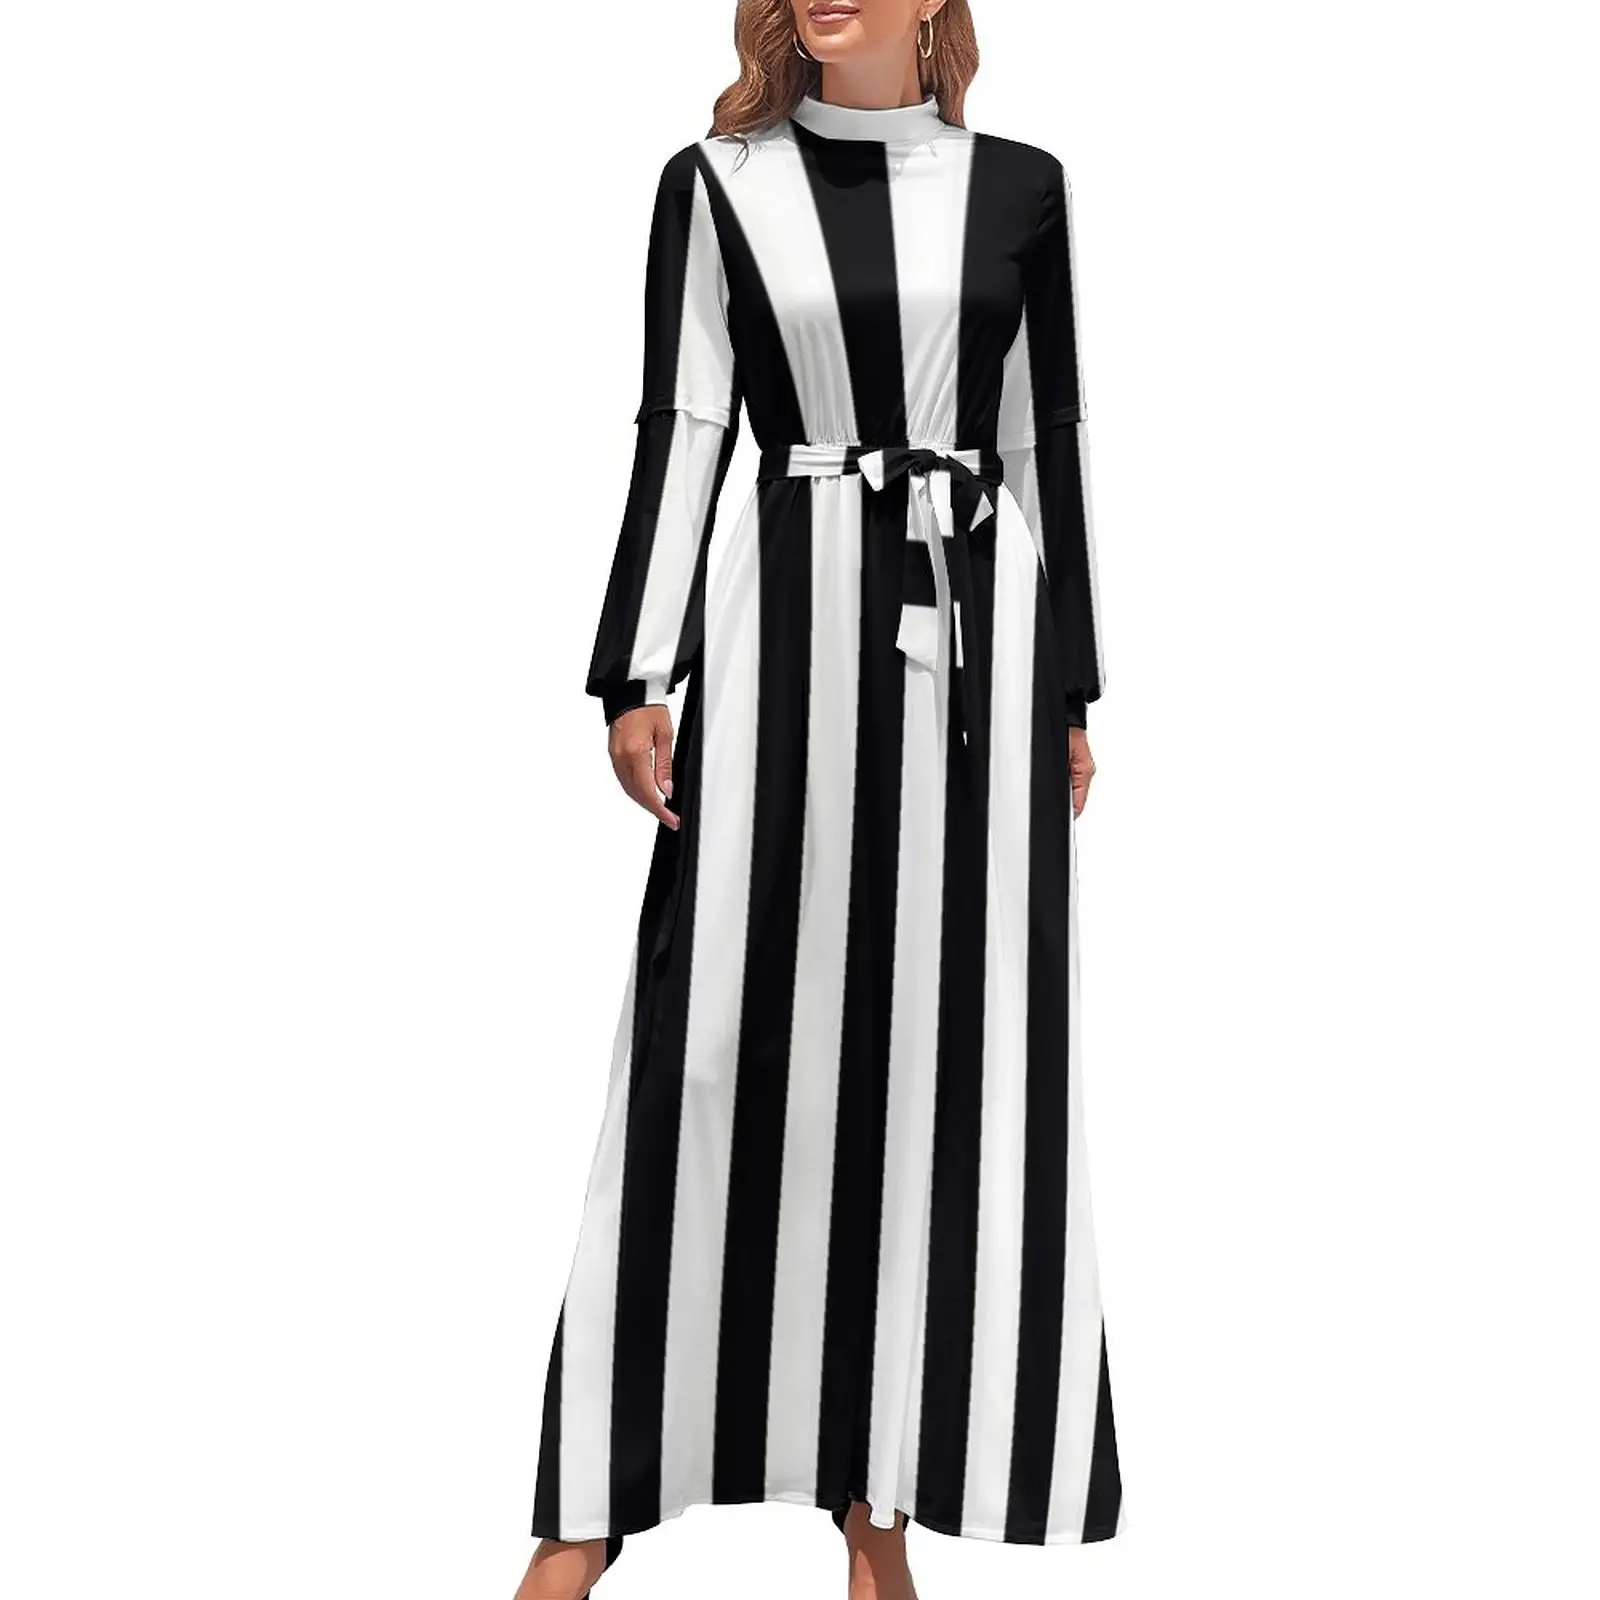 Casual stripe long dress for women ankle length fashion long sleeve dress woven dress